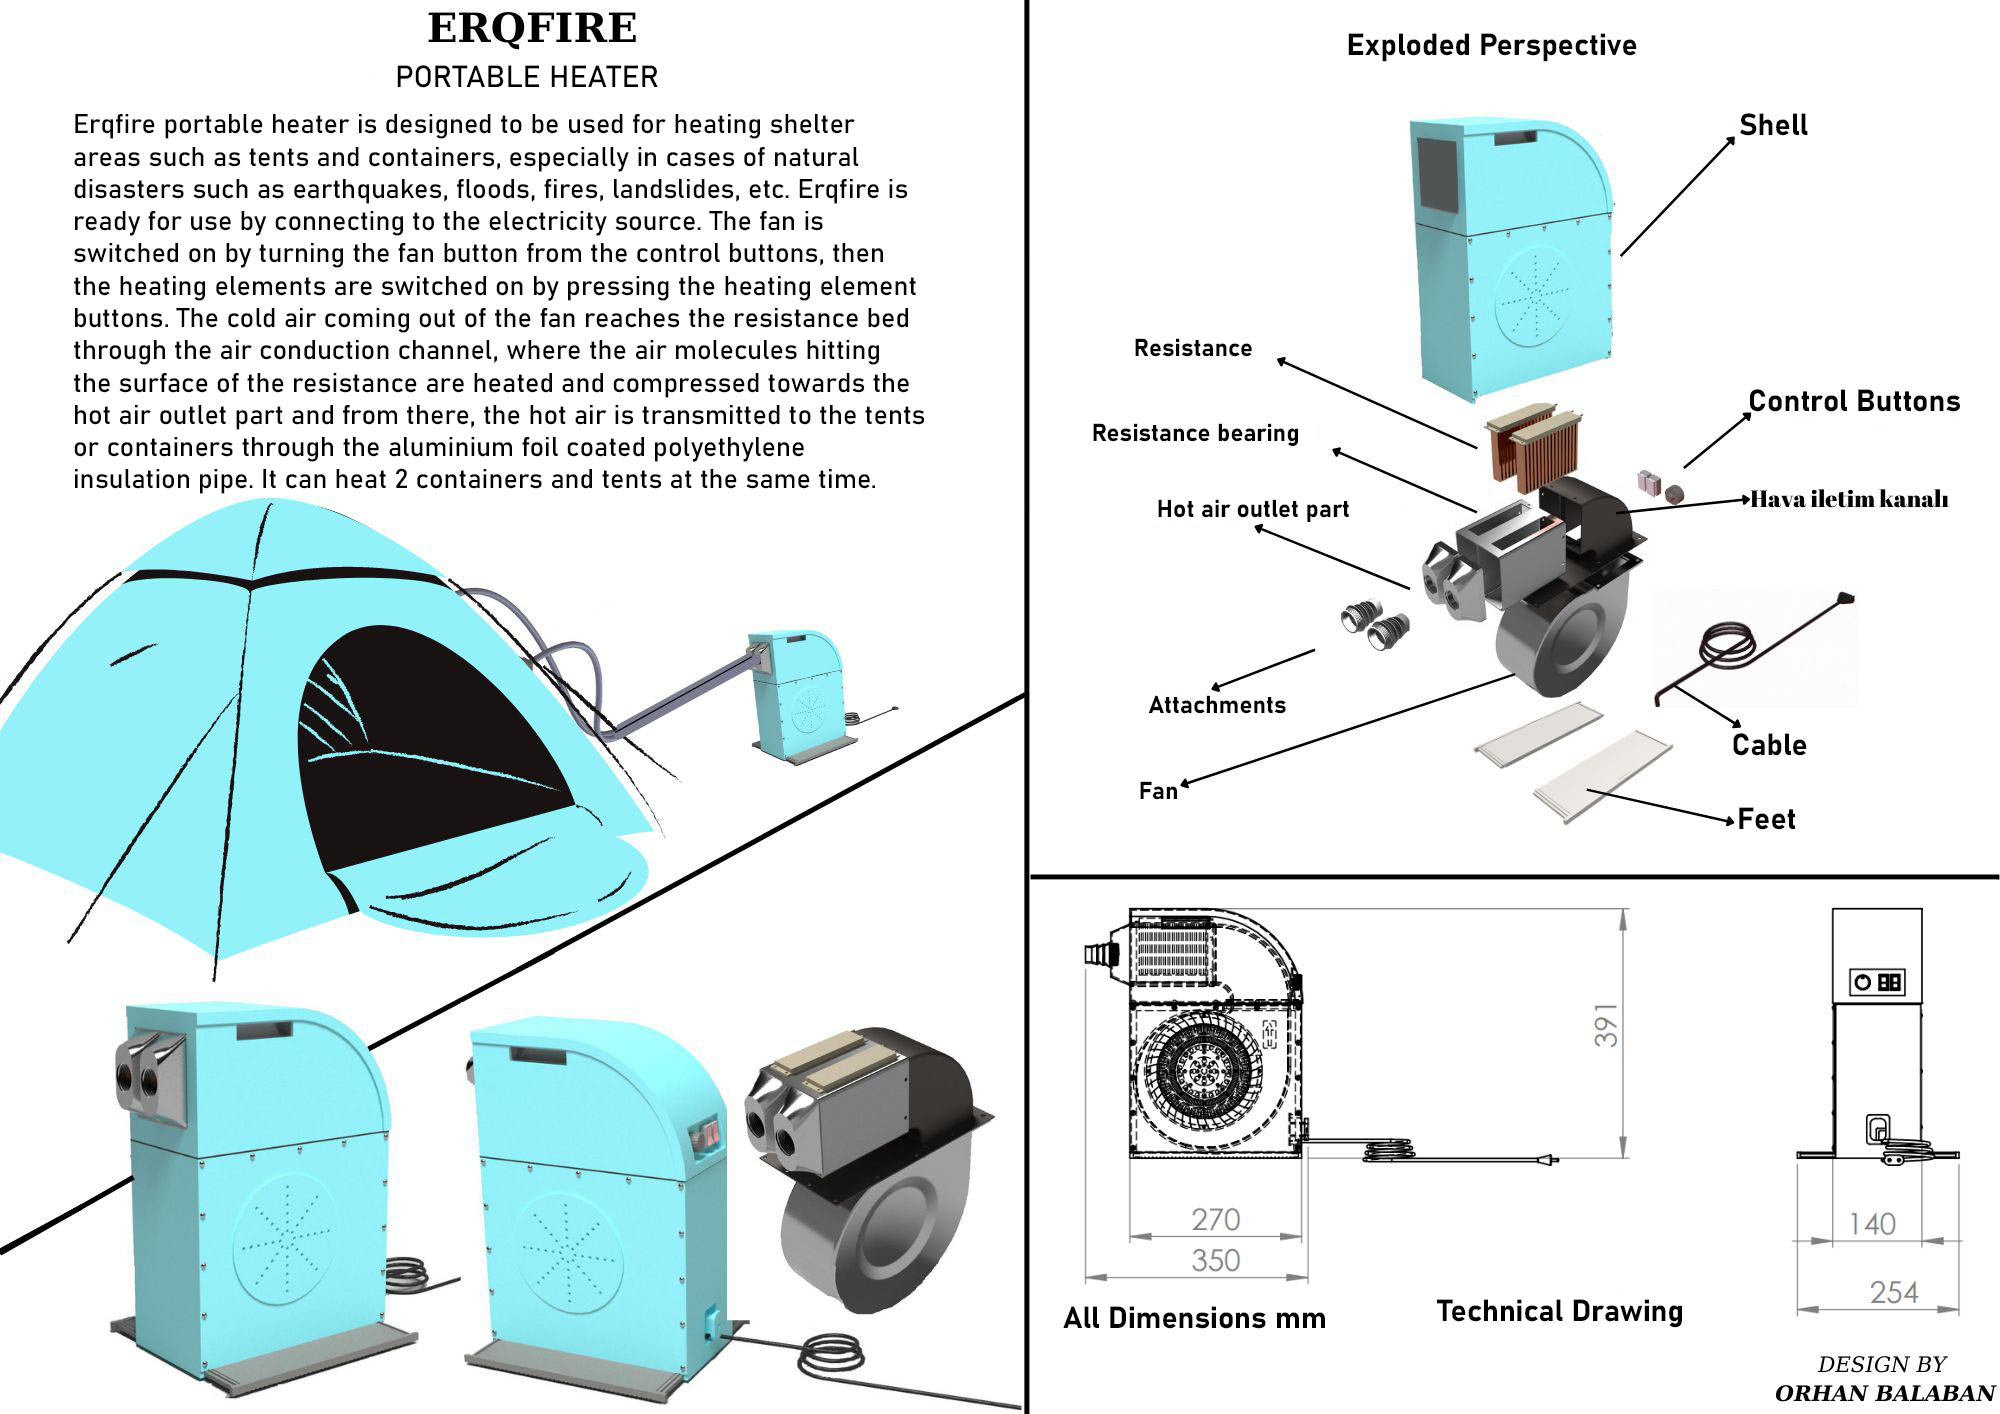 Erqfire Portable Heater Industrial Design Project - Orhan Balaban